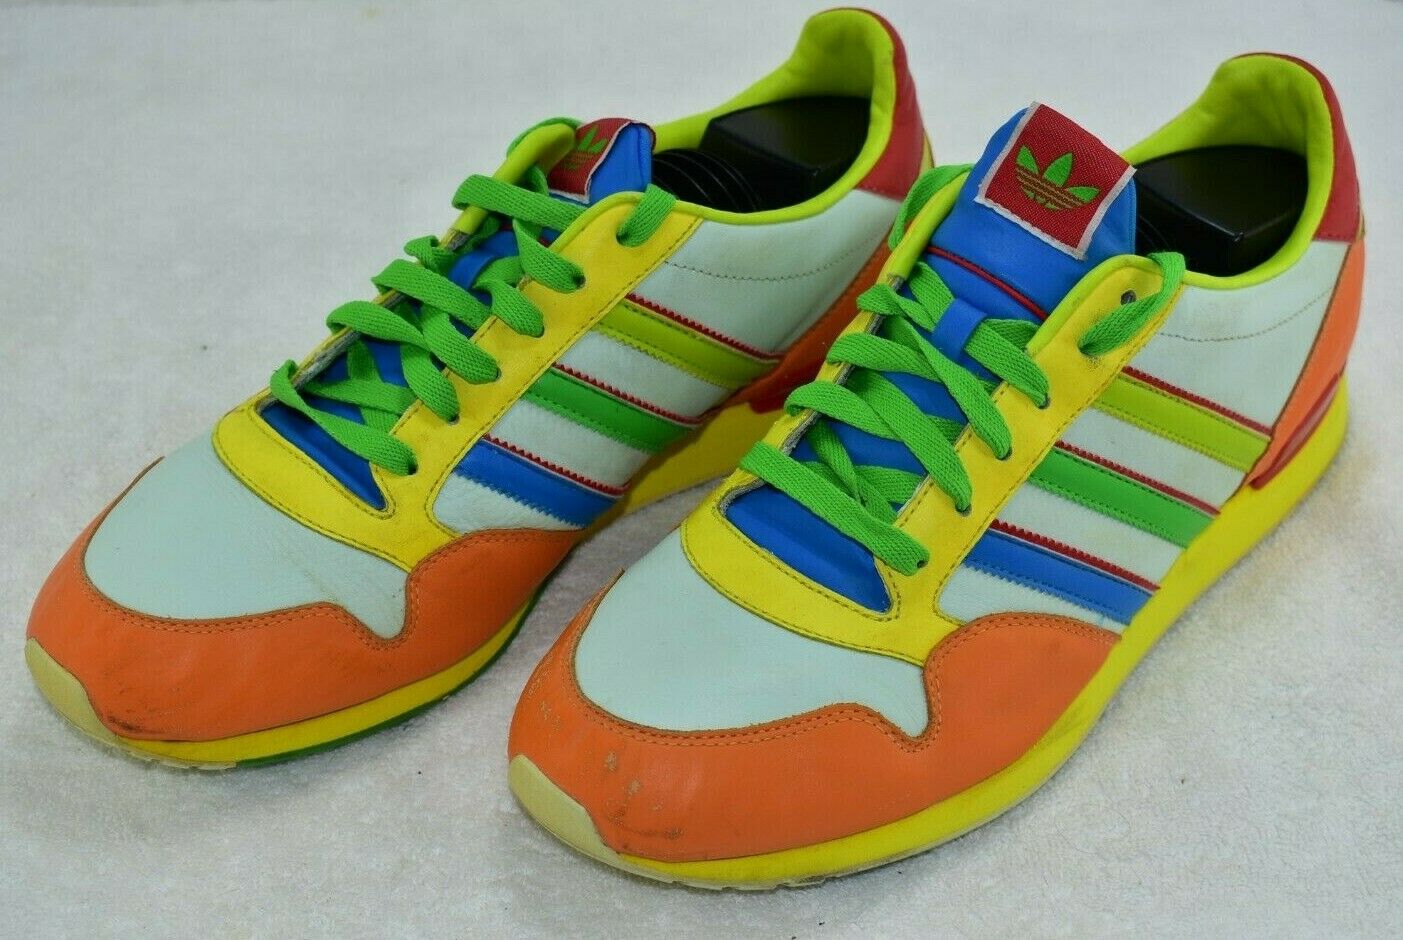 Adidas Men's ZXZ Plus Multi-Color Casual Athletic Comfort Shoes Size 11.5 (2006)